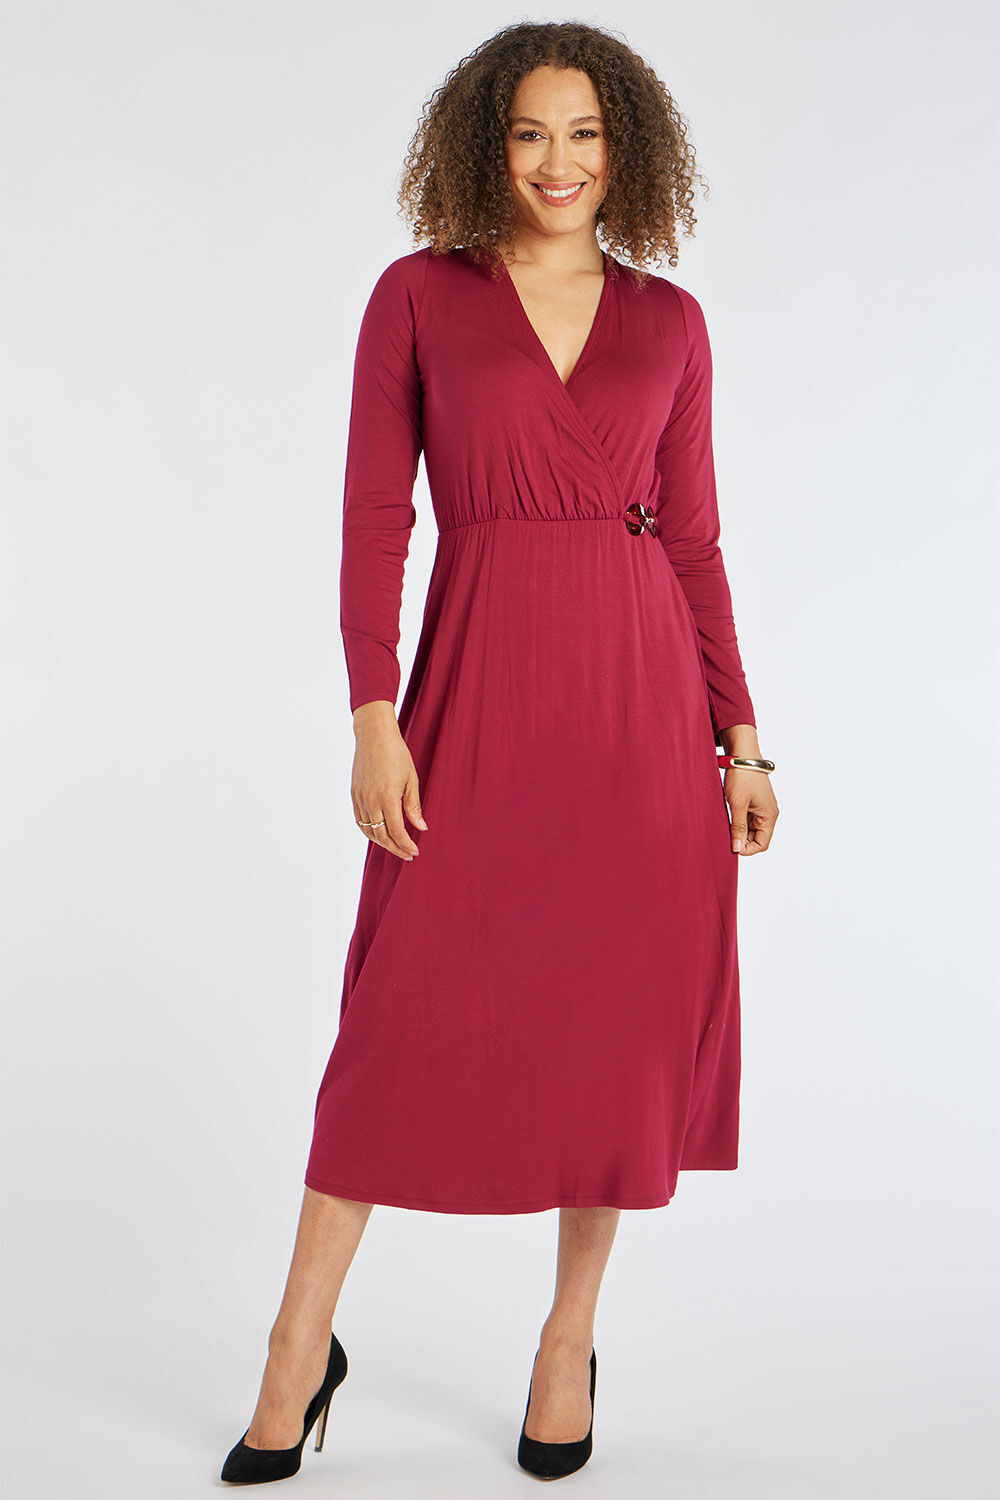 Bonmarche Women’s Red Plain Wrap Front Dress with Tortoise Shell Belt Detail, Size: 10